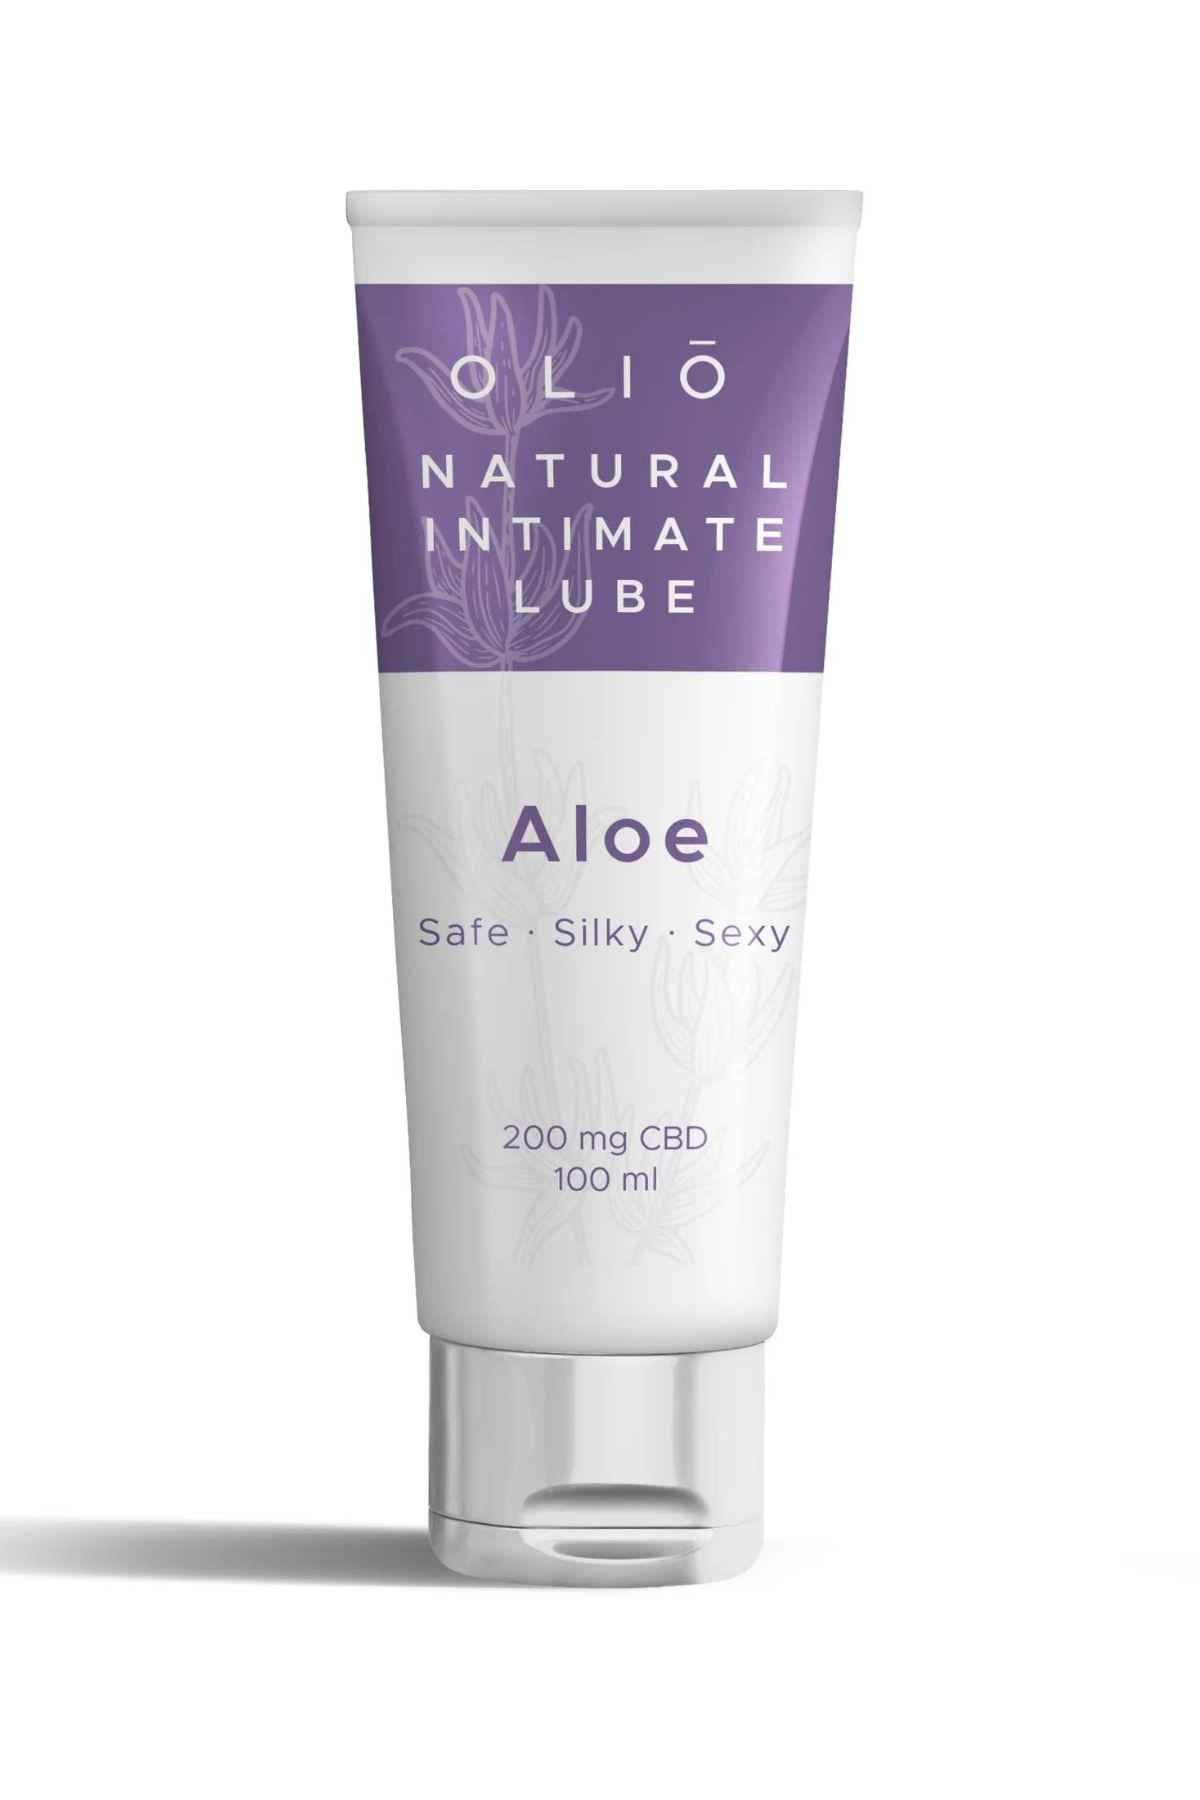 Olio's Natural Intimate Lube